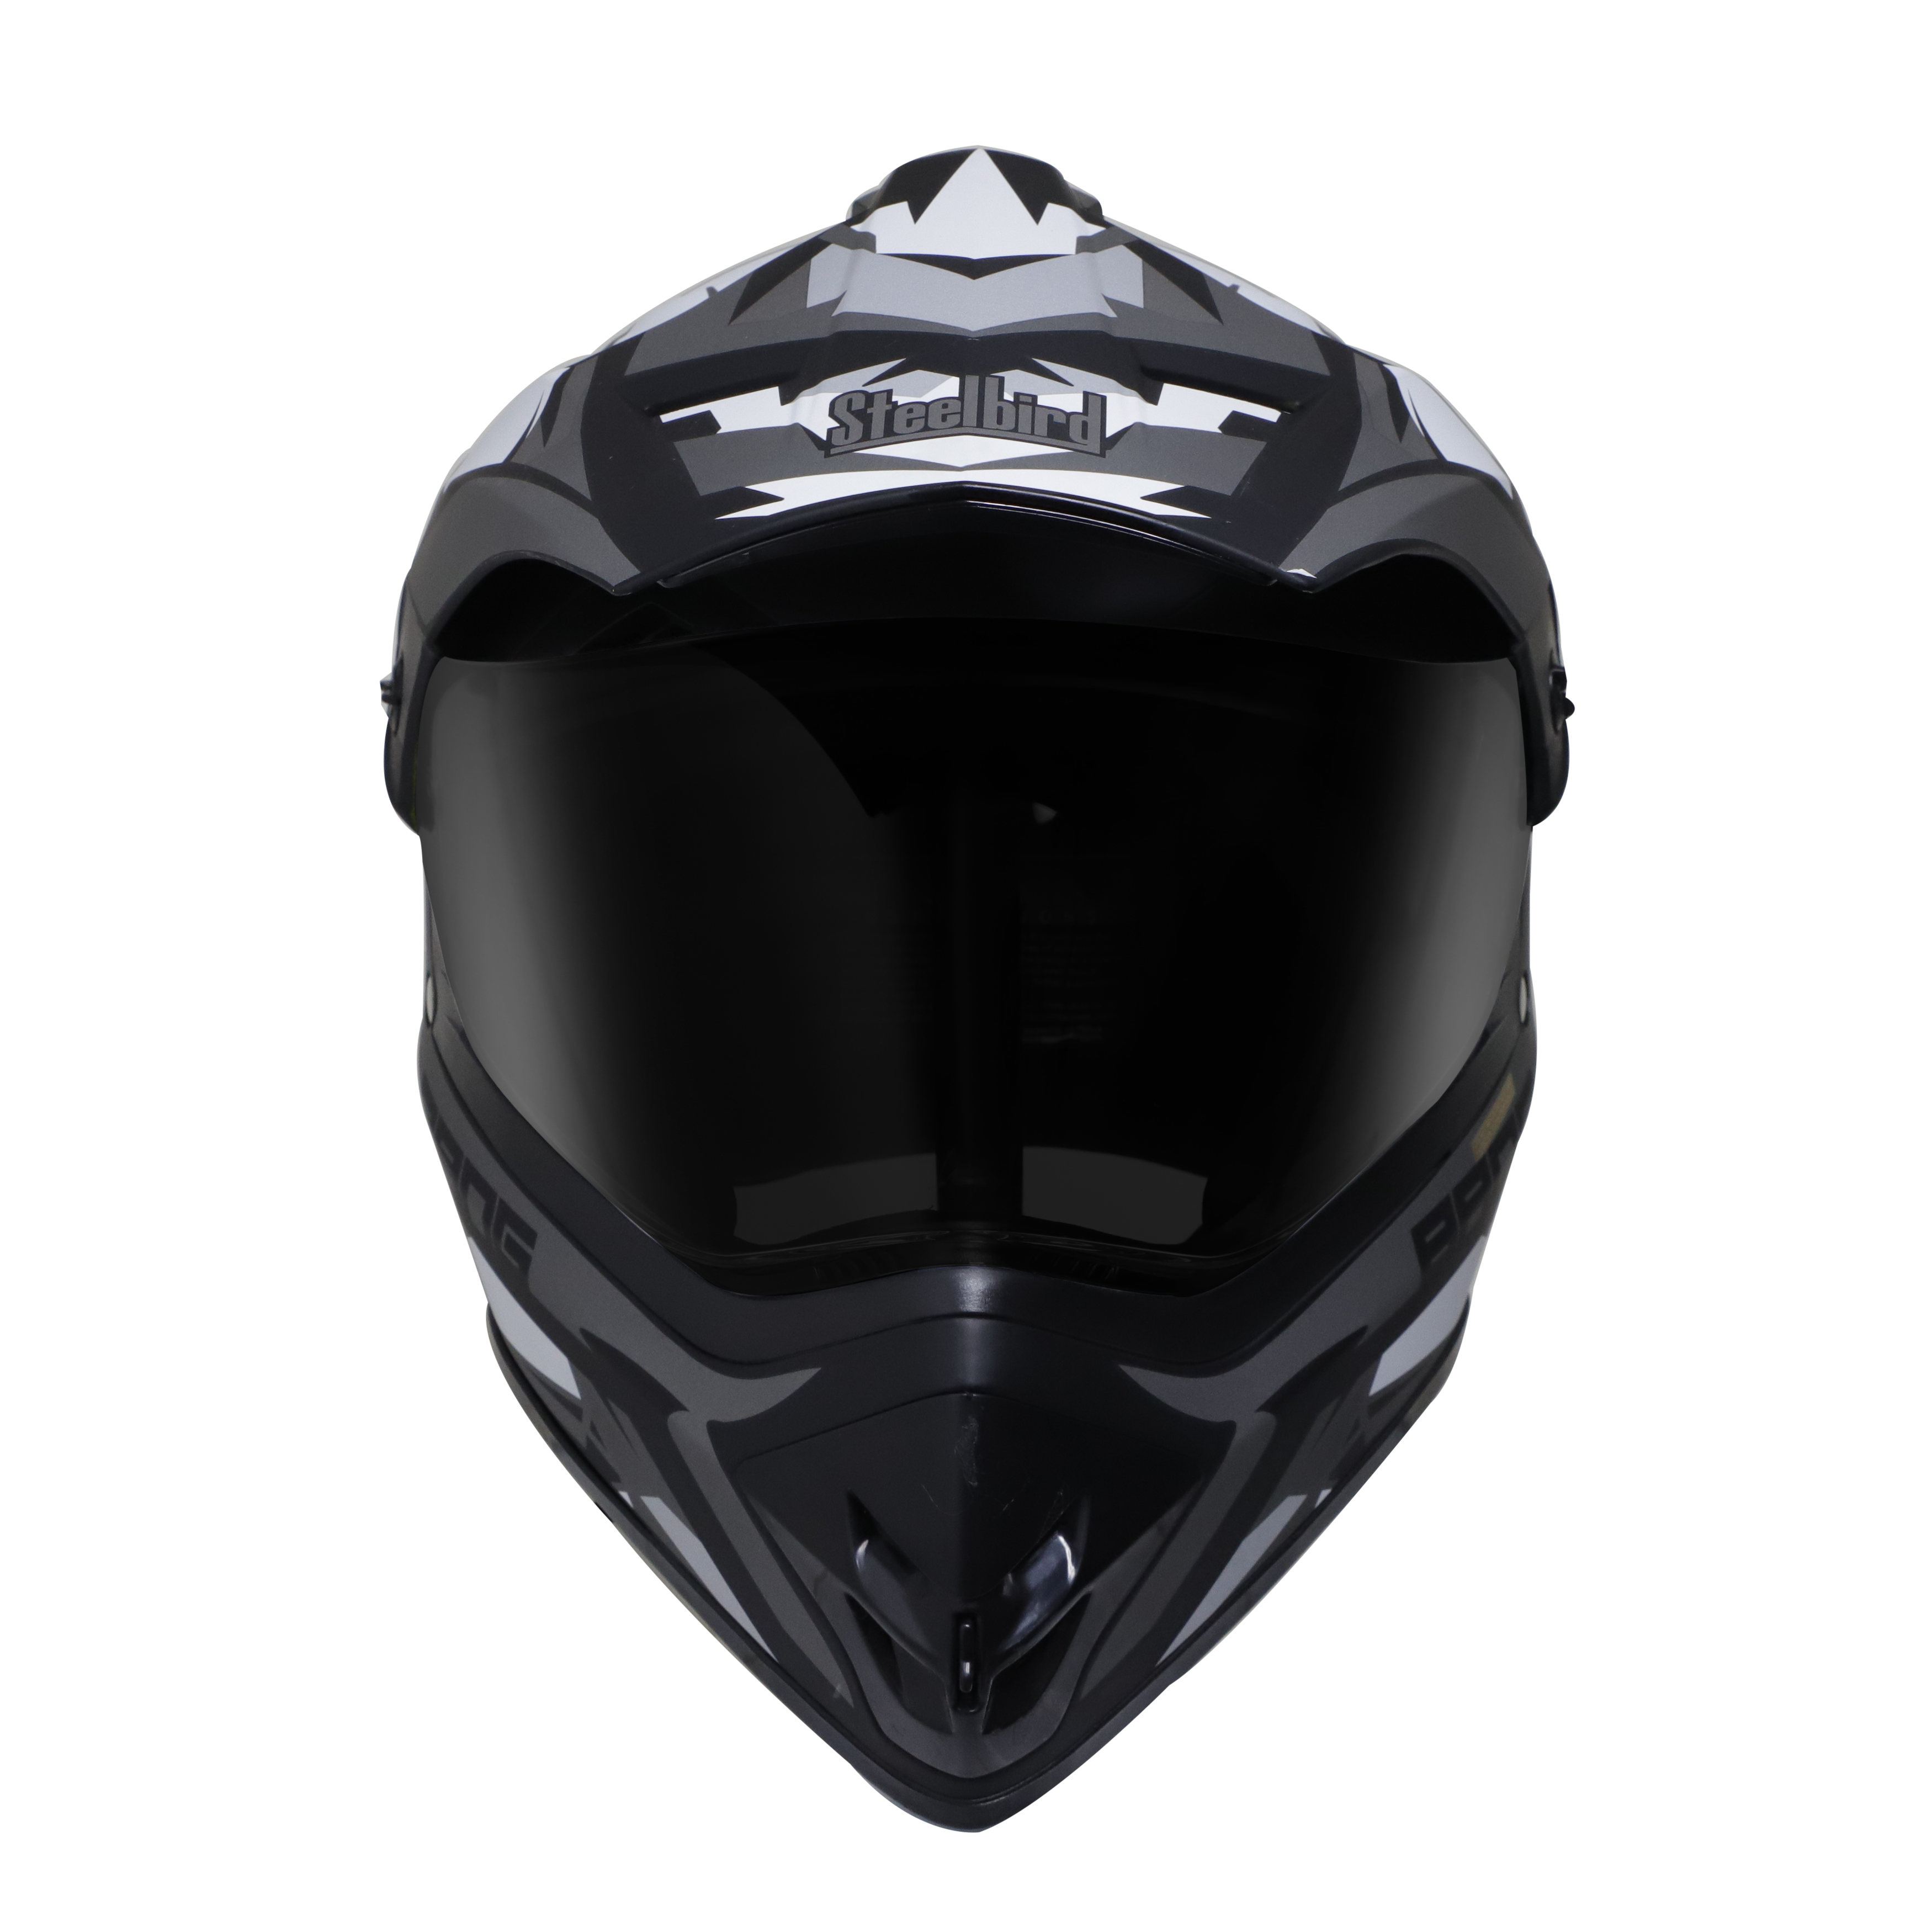 Steelbird Off Road Bang KTN ISI Certified ABS Material Shell Motocross Helmet (Matt Black Grey With Smoke Visor)